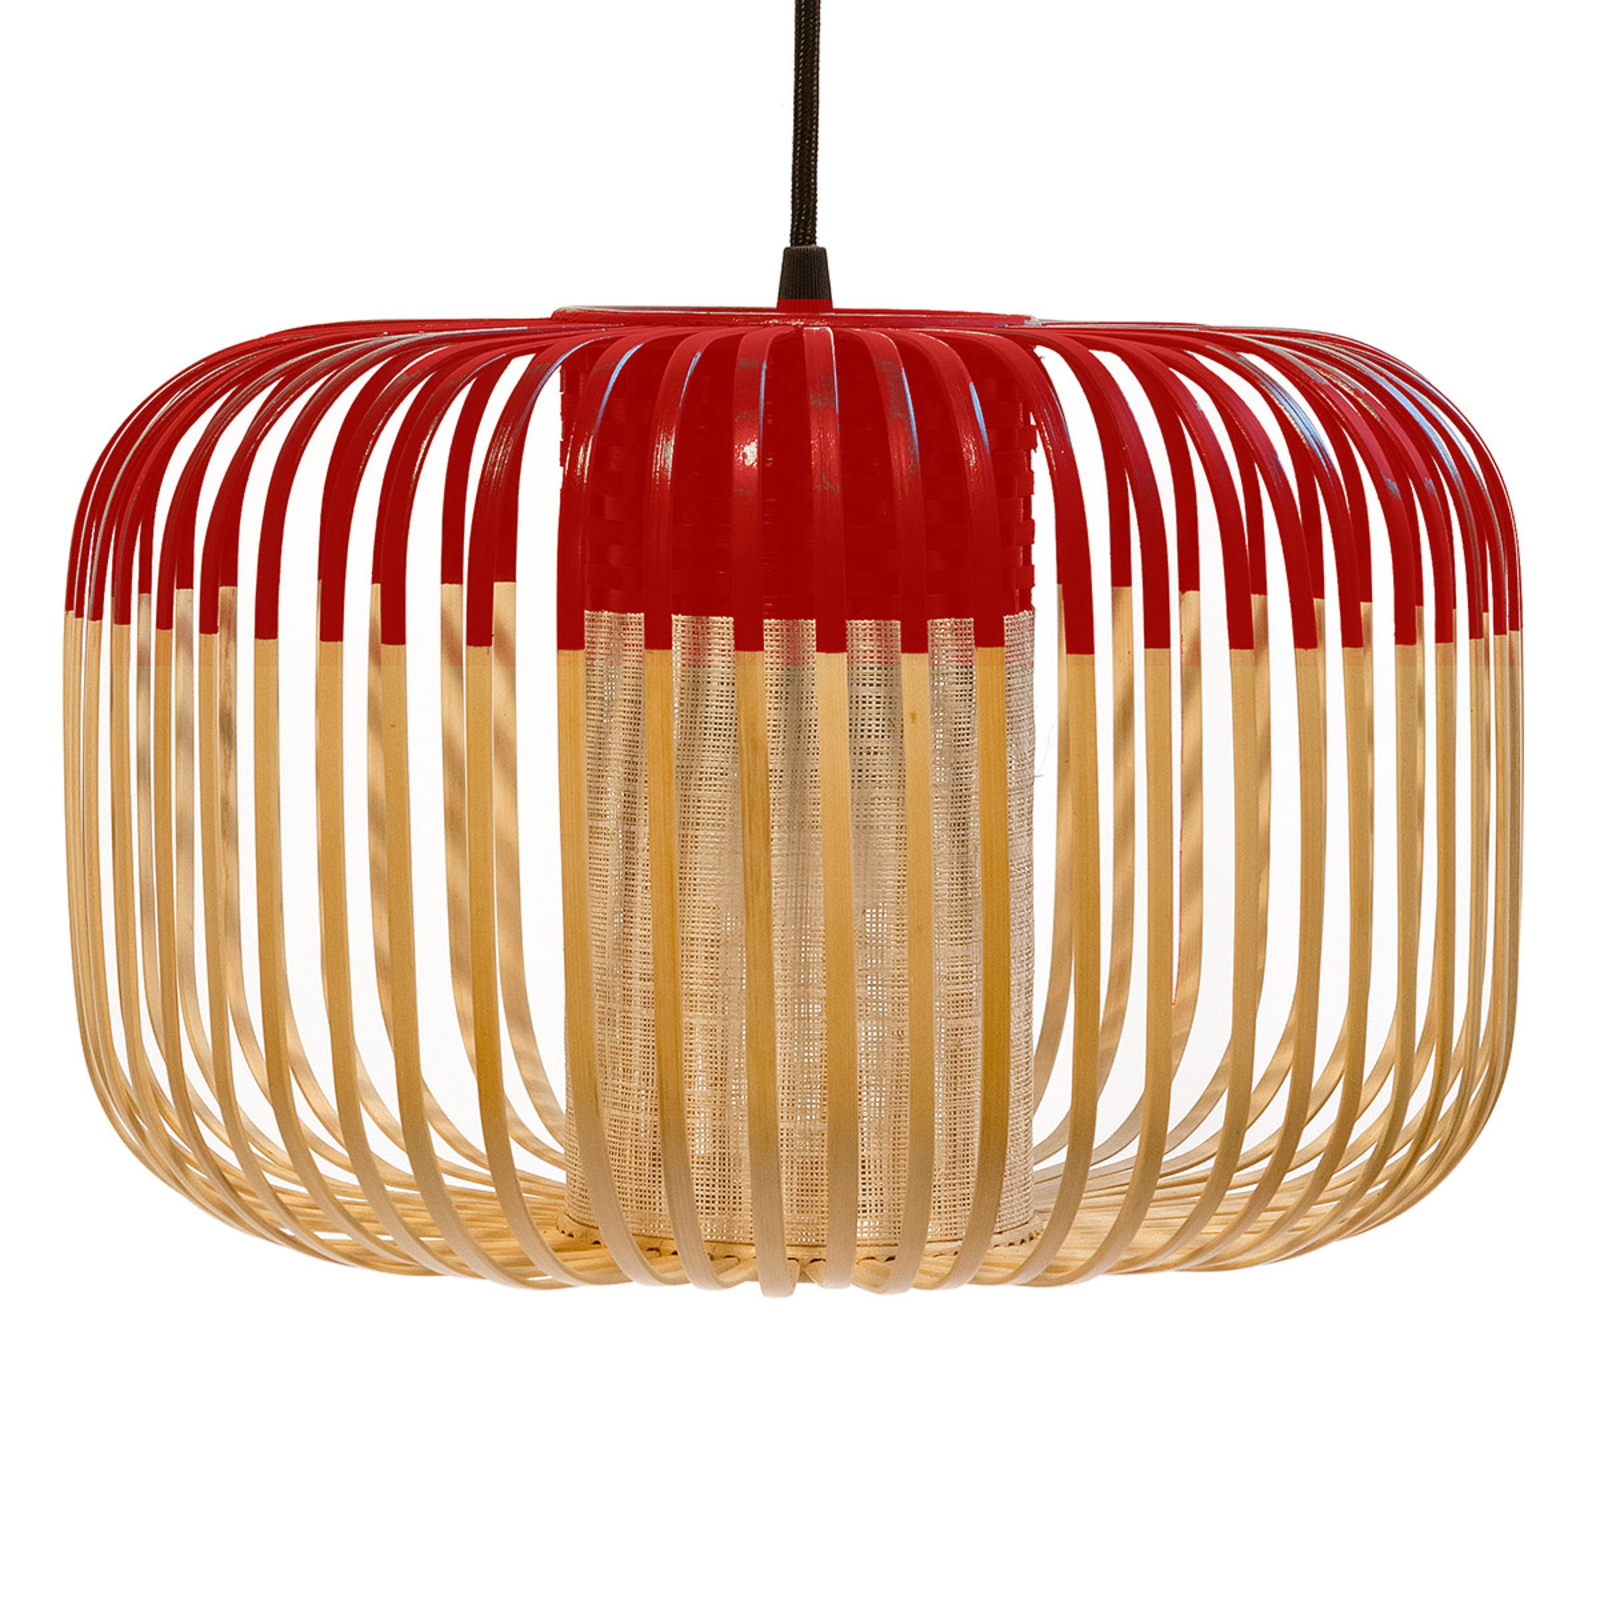 Forestier Bamboo Light S pendant lamp 35 cm red